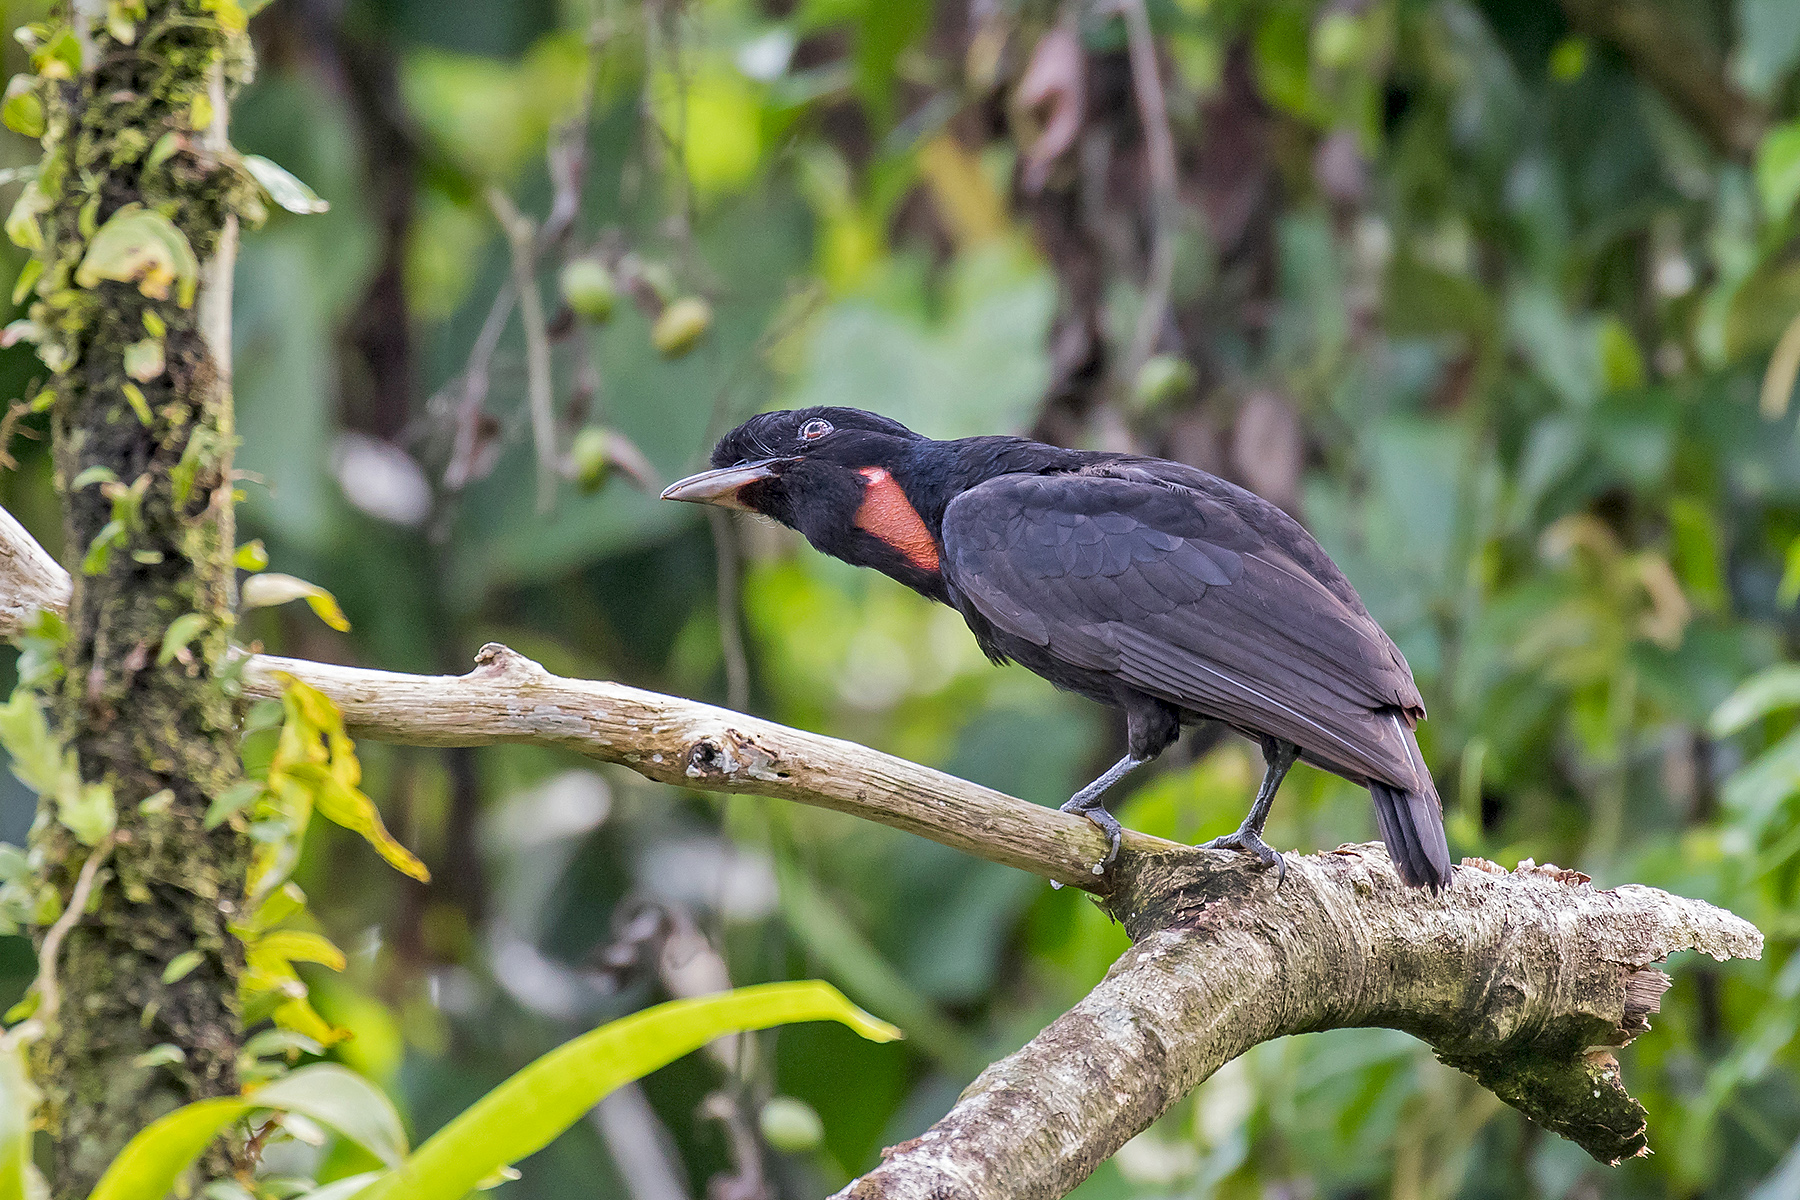 Bare-necked Umbrellabird on our Costa Rica birding tour (image by Pete Morris)